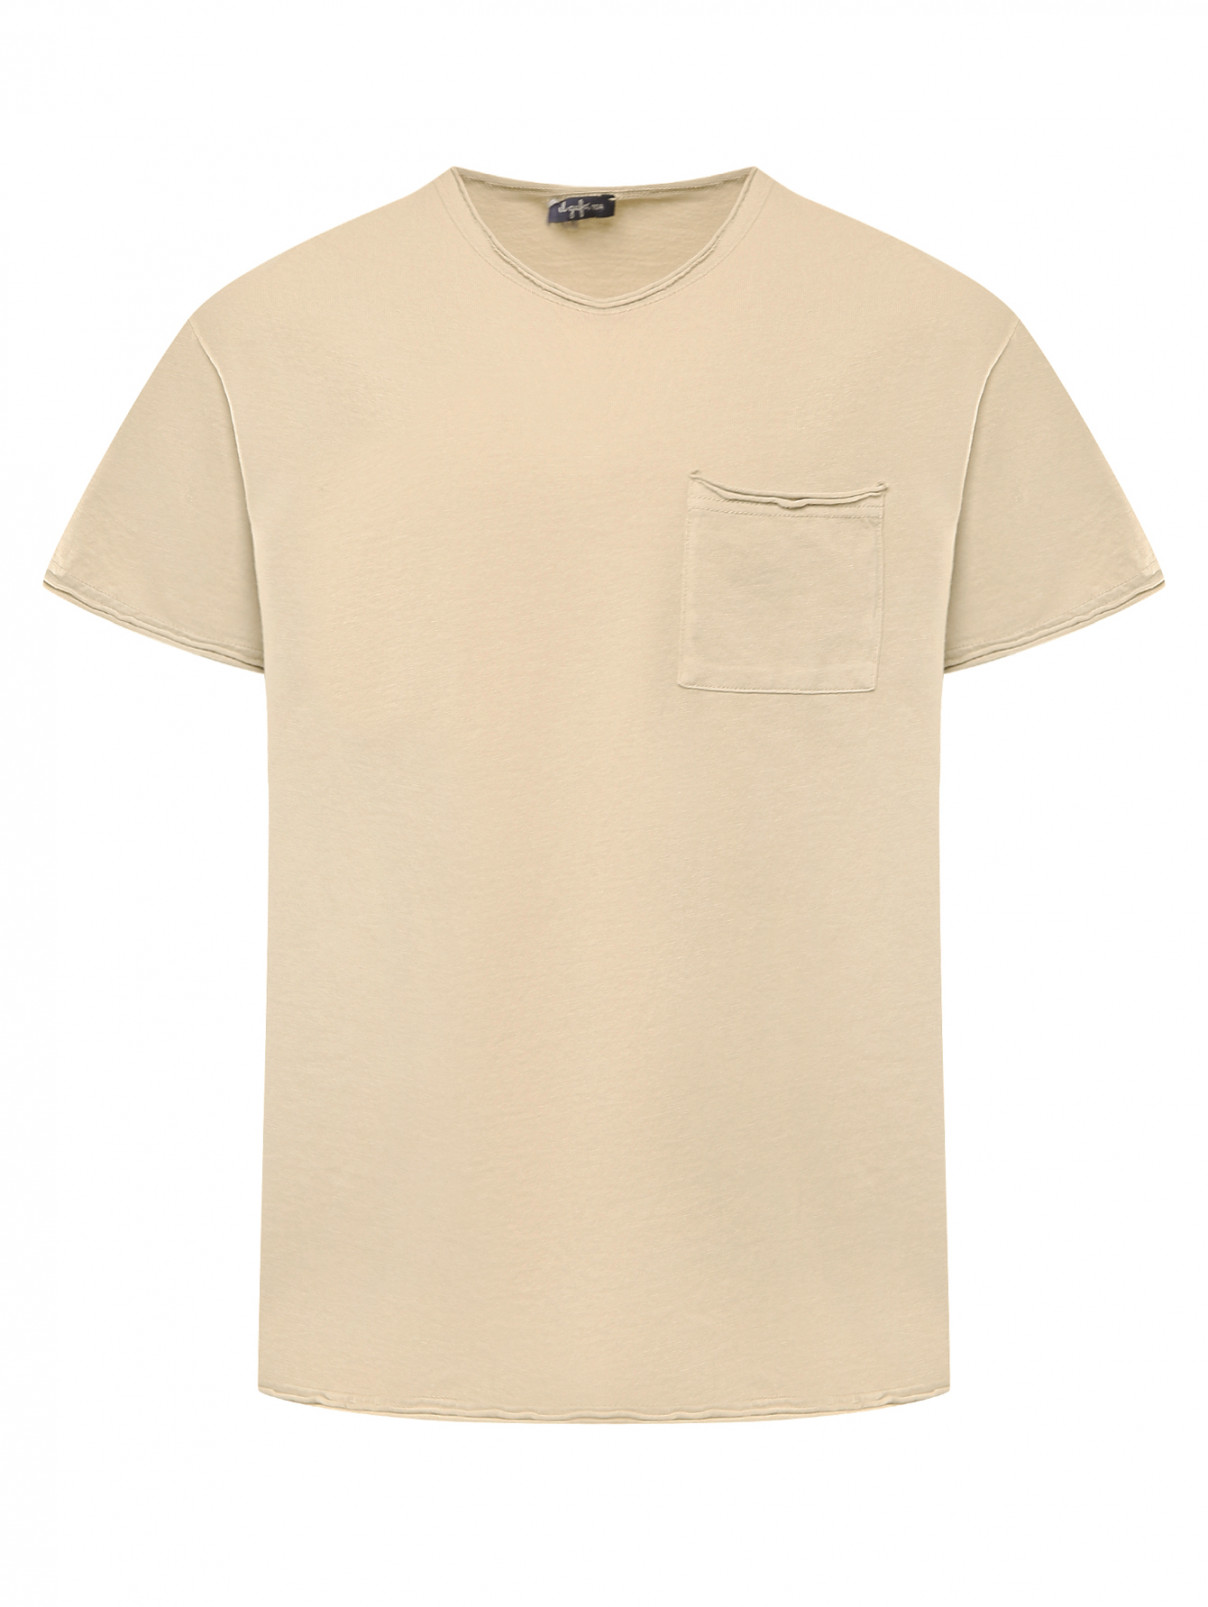 Однотонная футболка с карманом Il Gufo  –  Общий вид  – Цвет:  Бежевый